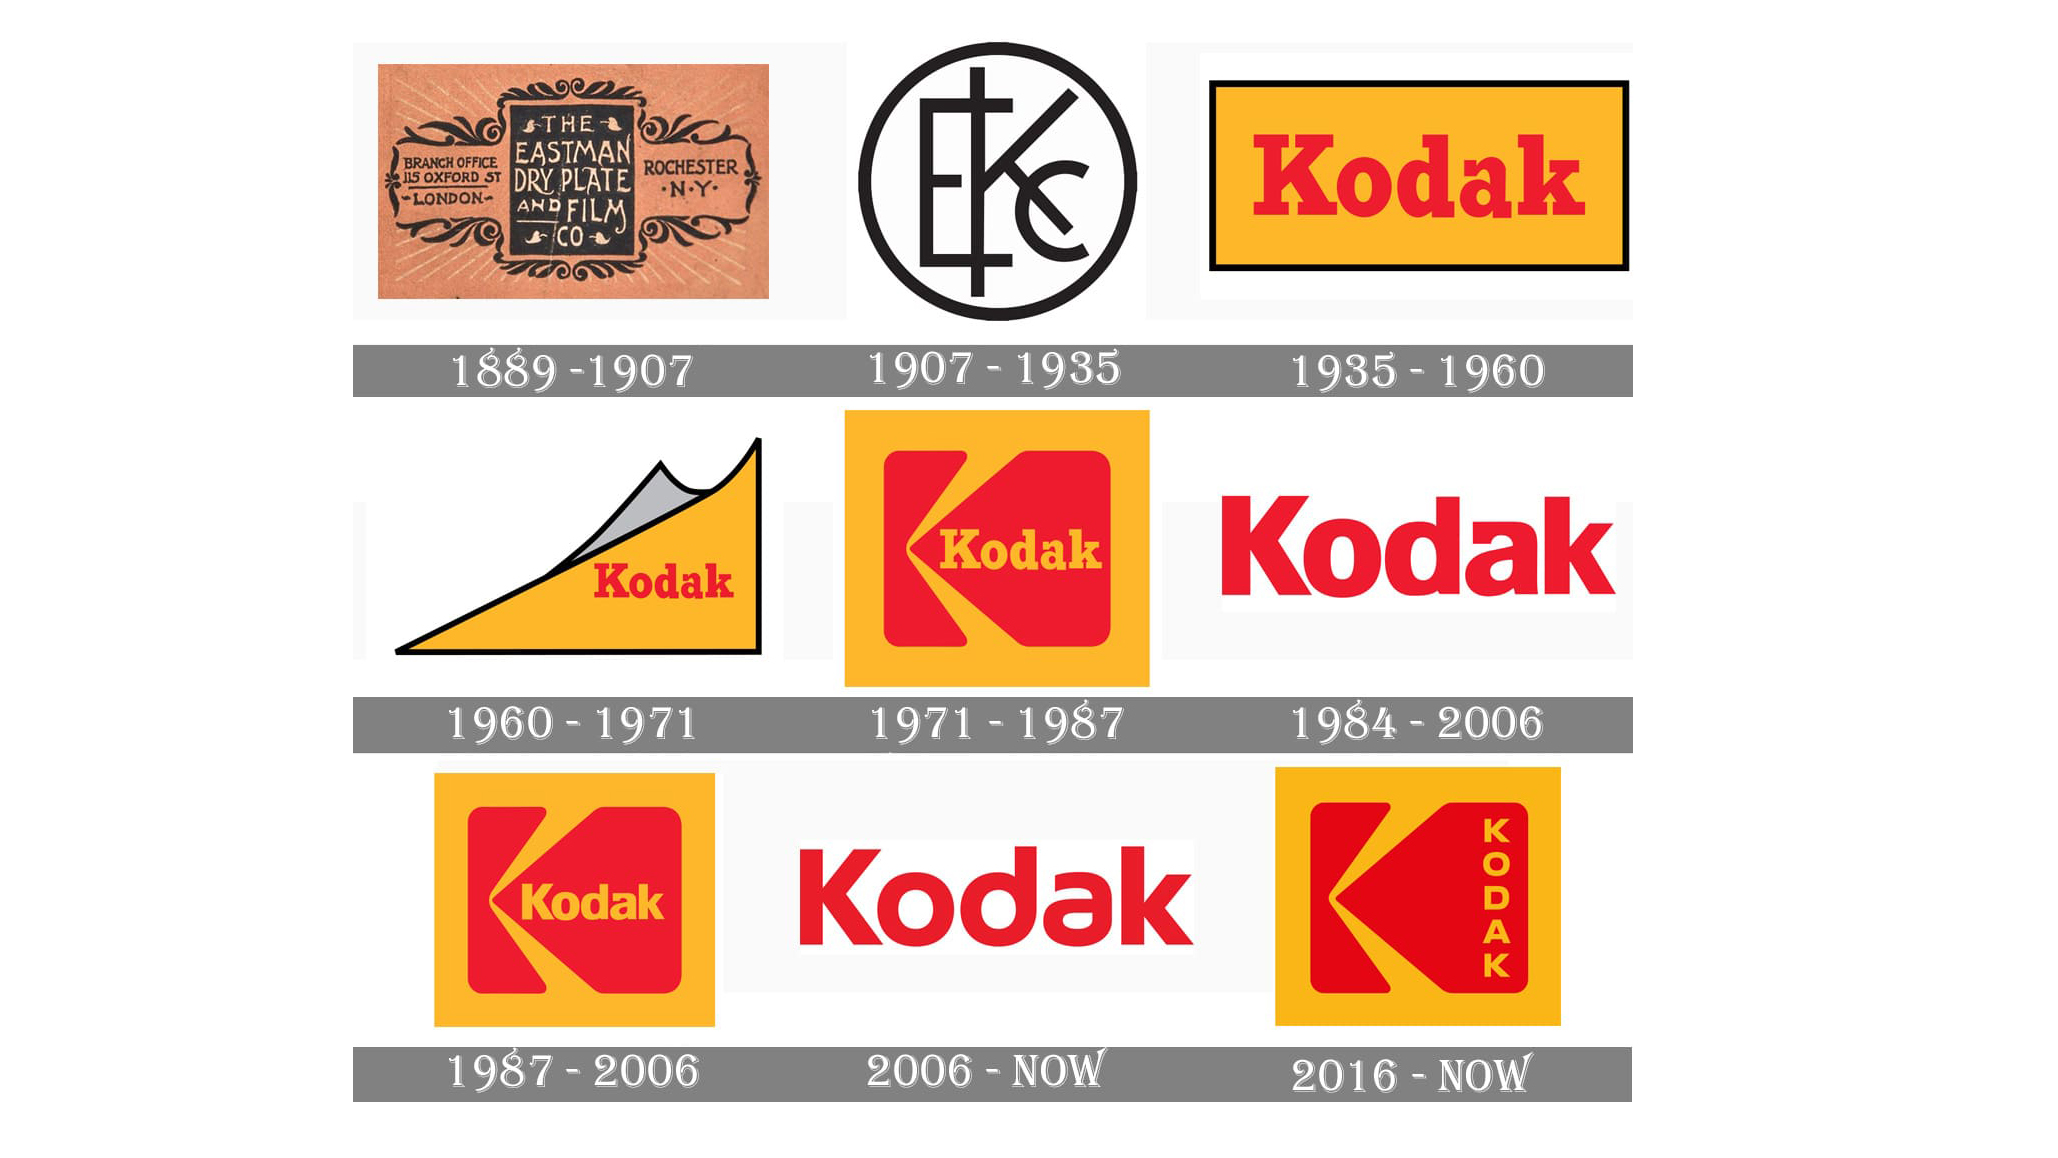 Kodak logos through history